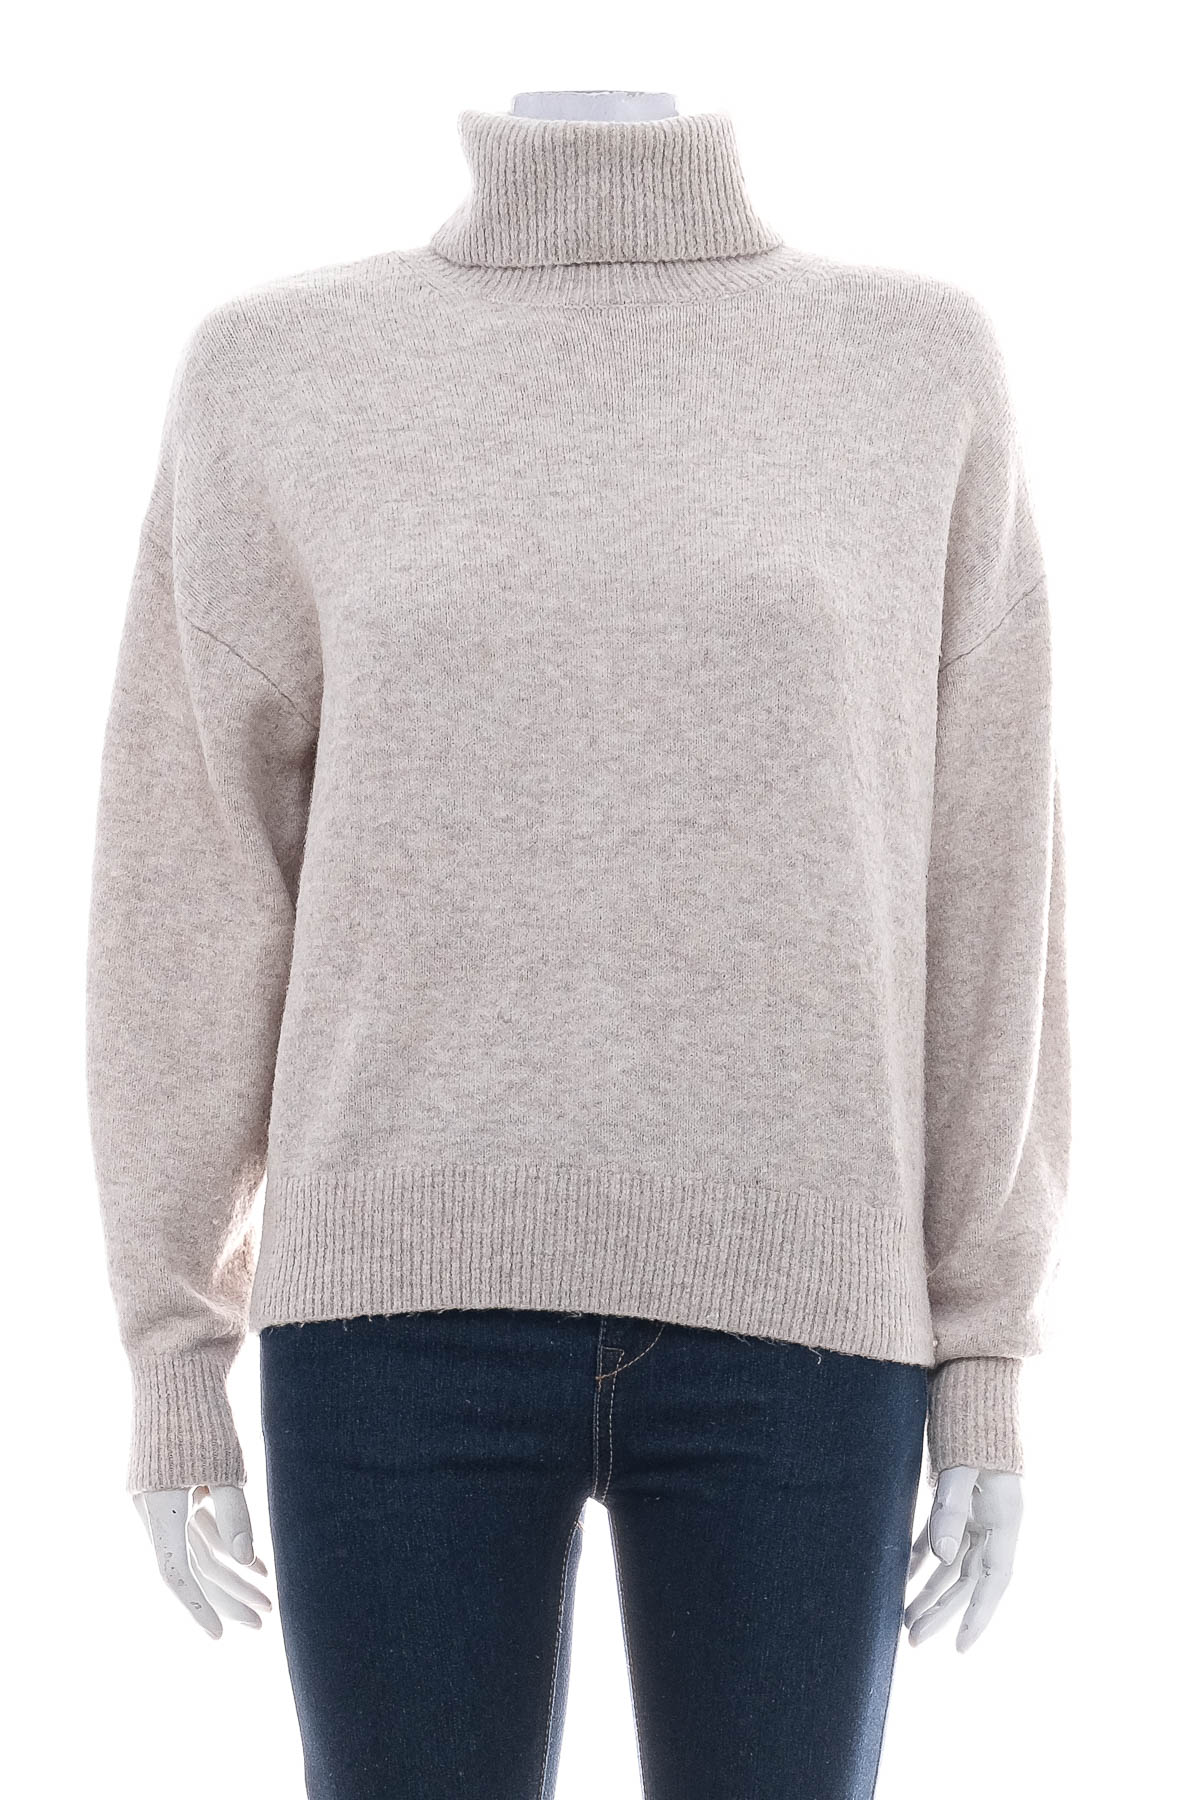 Women's sweater - H&M - 0